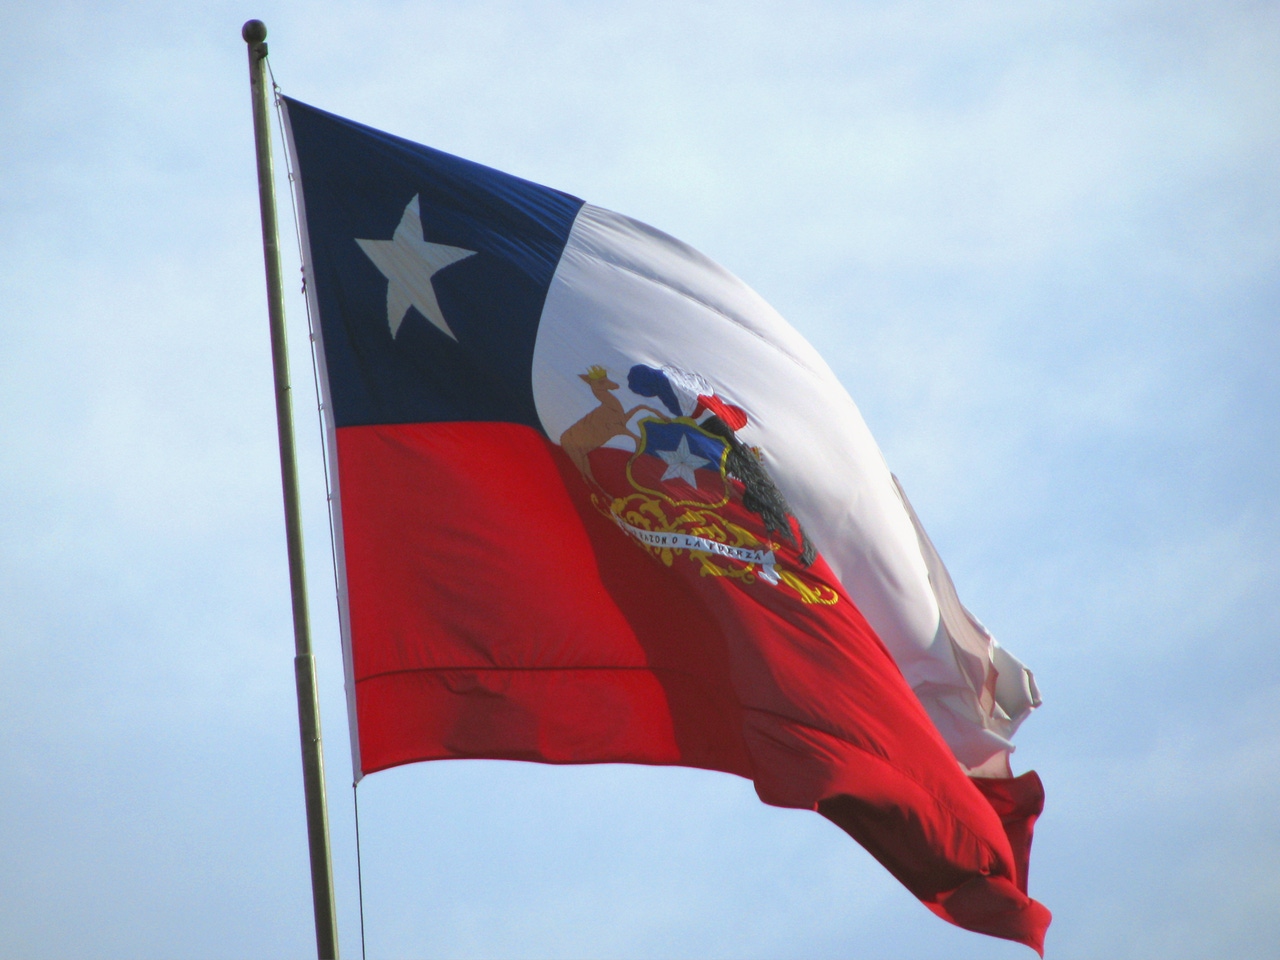 Claro Chile launches LTE services